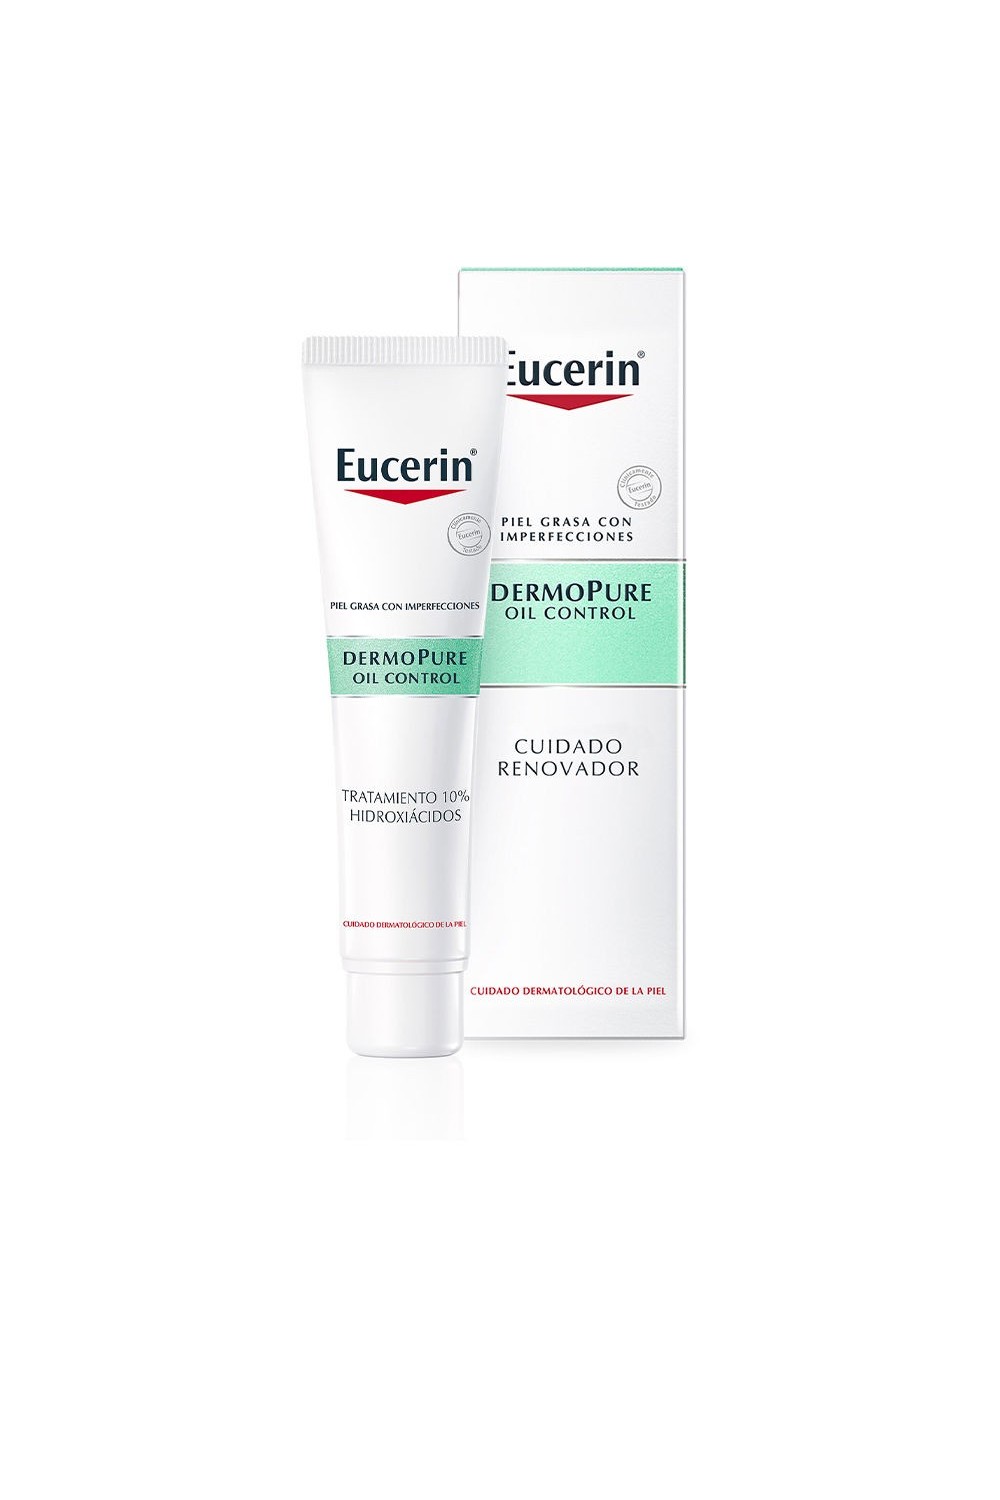 Eucerin Dermopure Oil Control Treatment 10 Hydroxy Acids 40ml